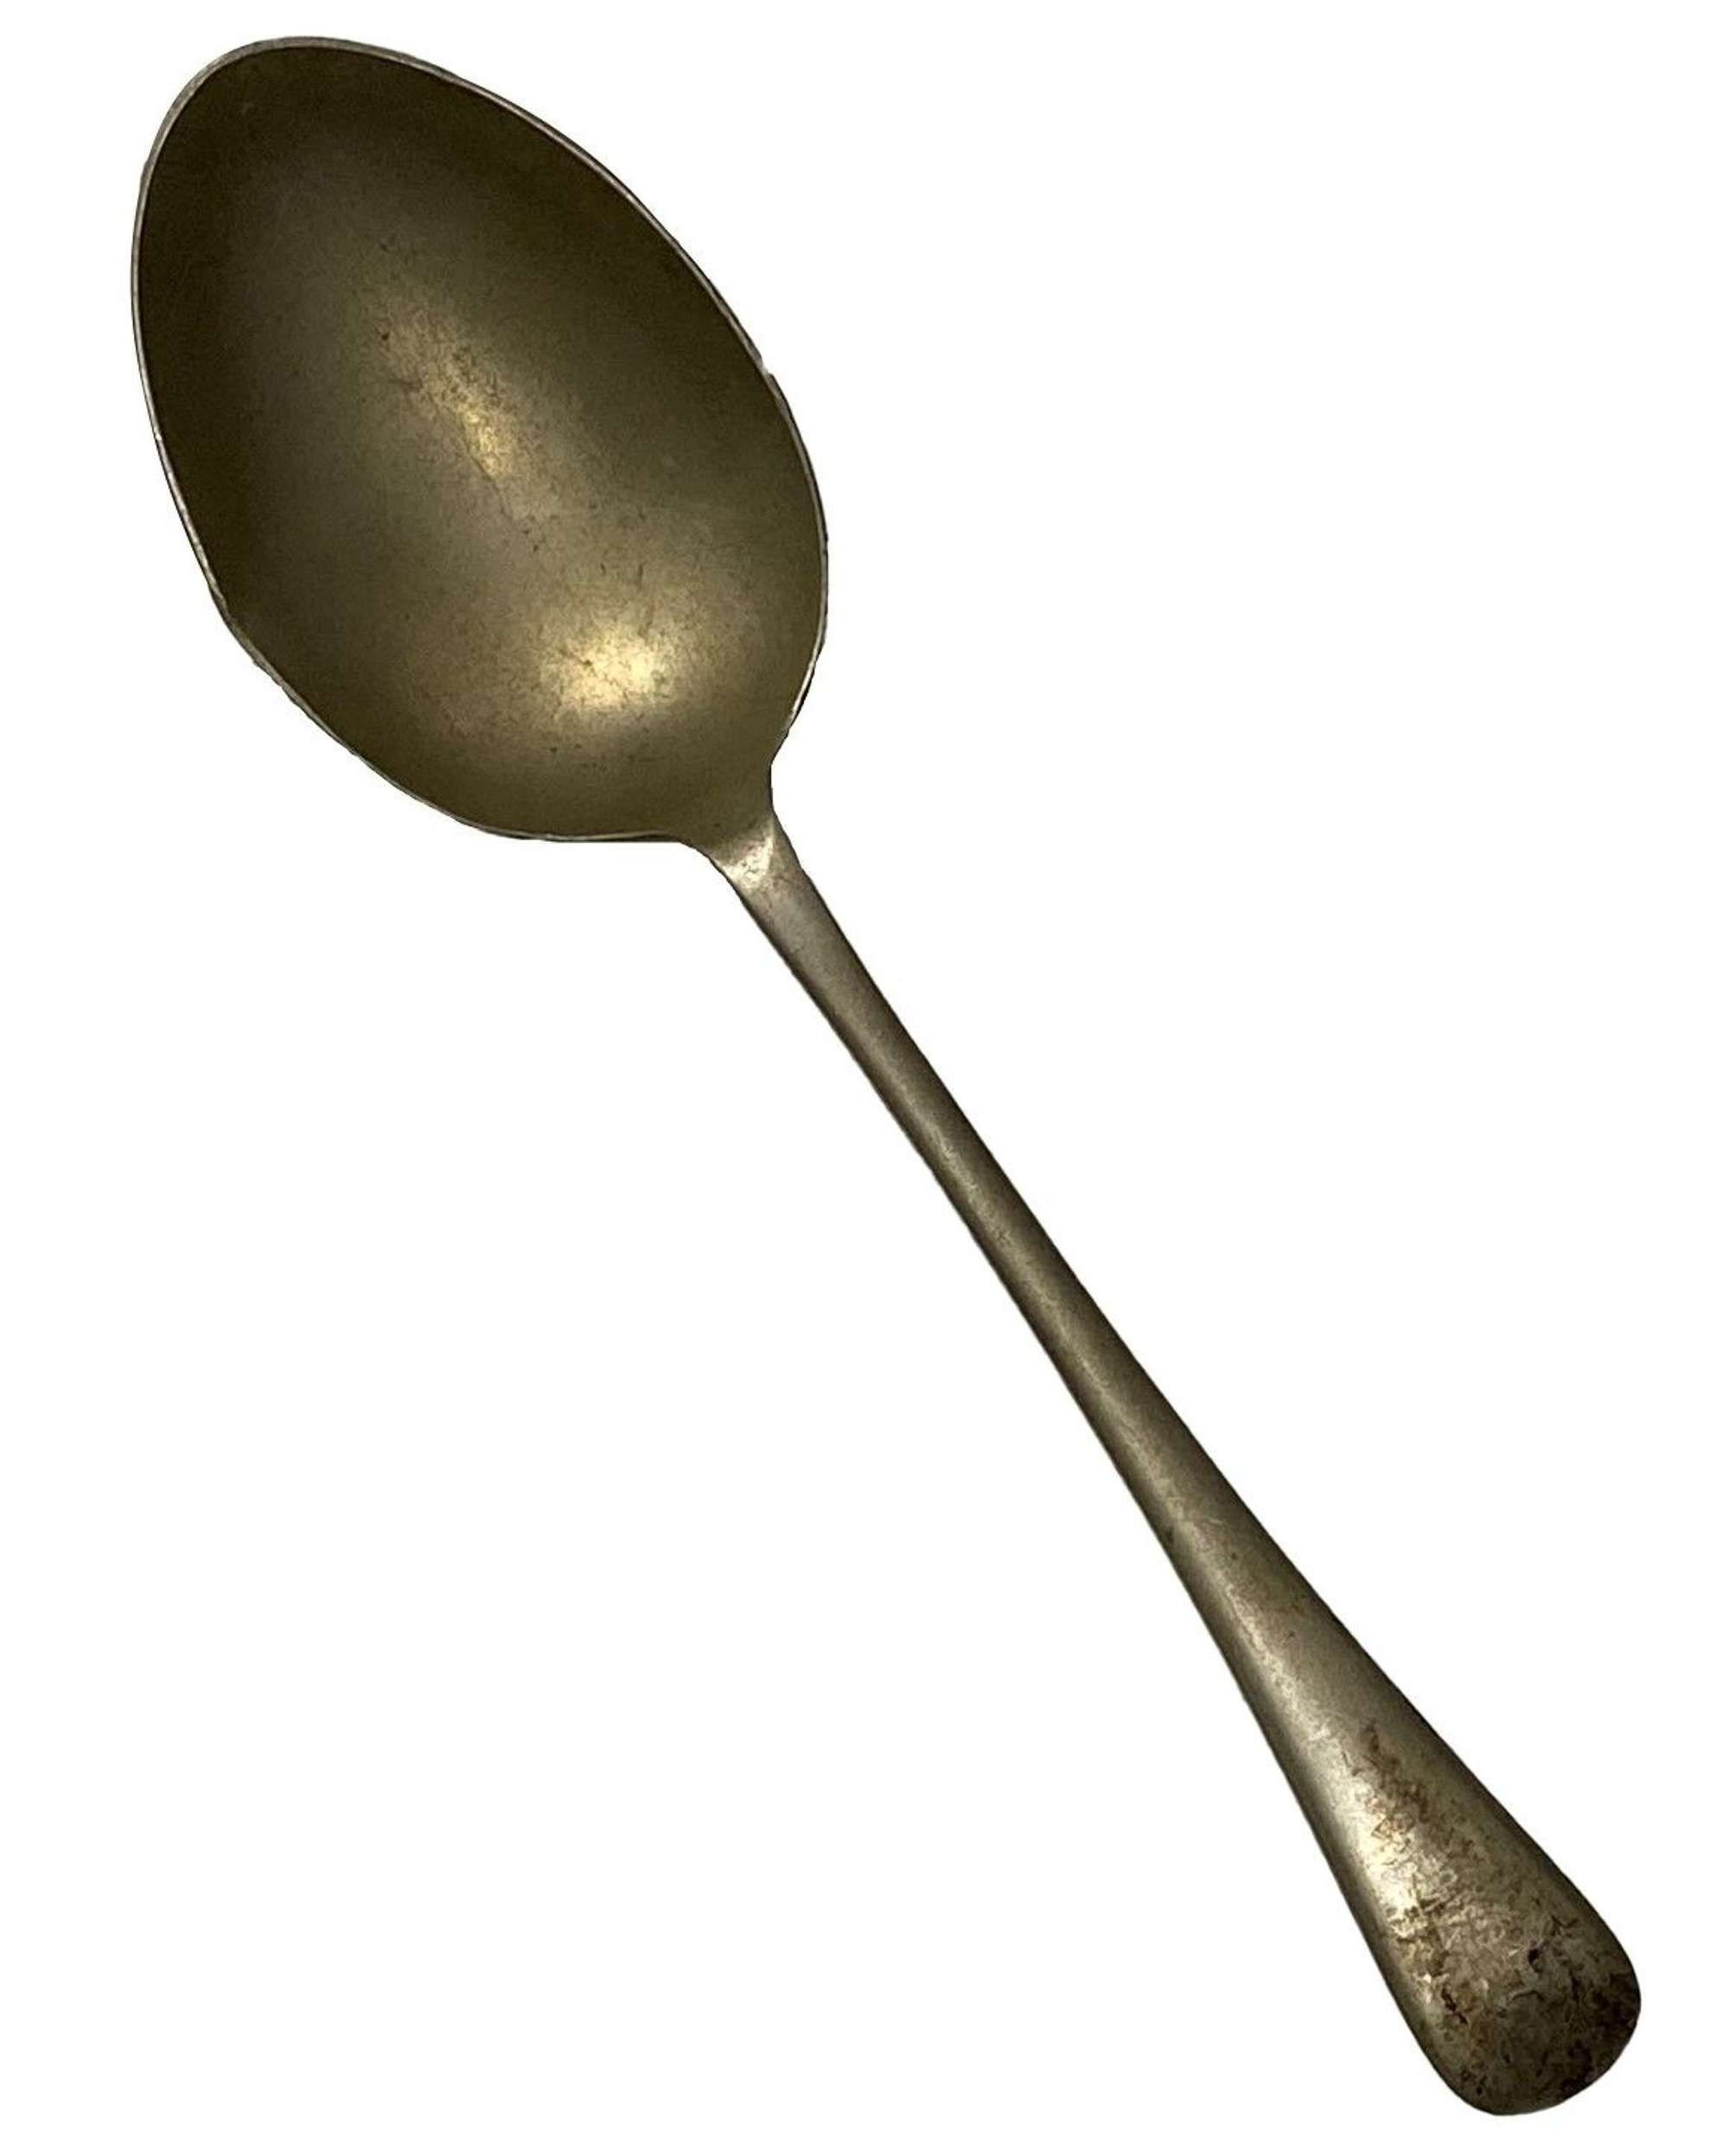 Original 1944 Dated British Army Spoon by 'T G Ltd'